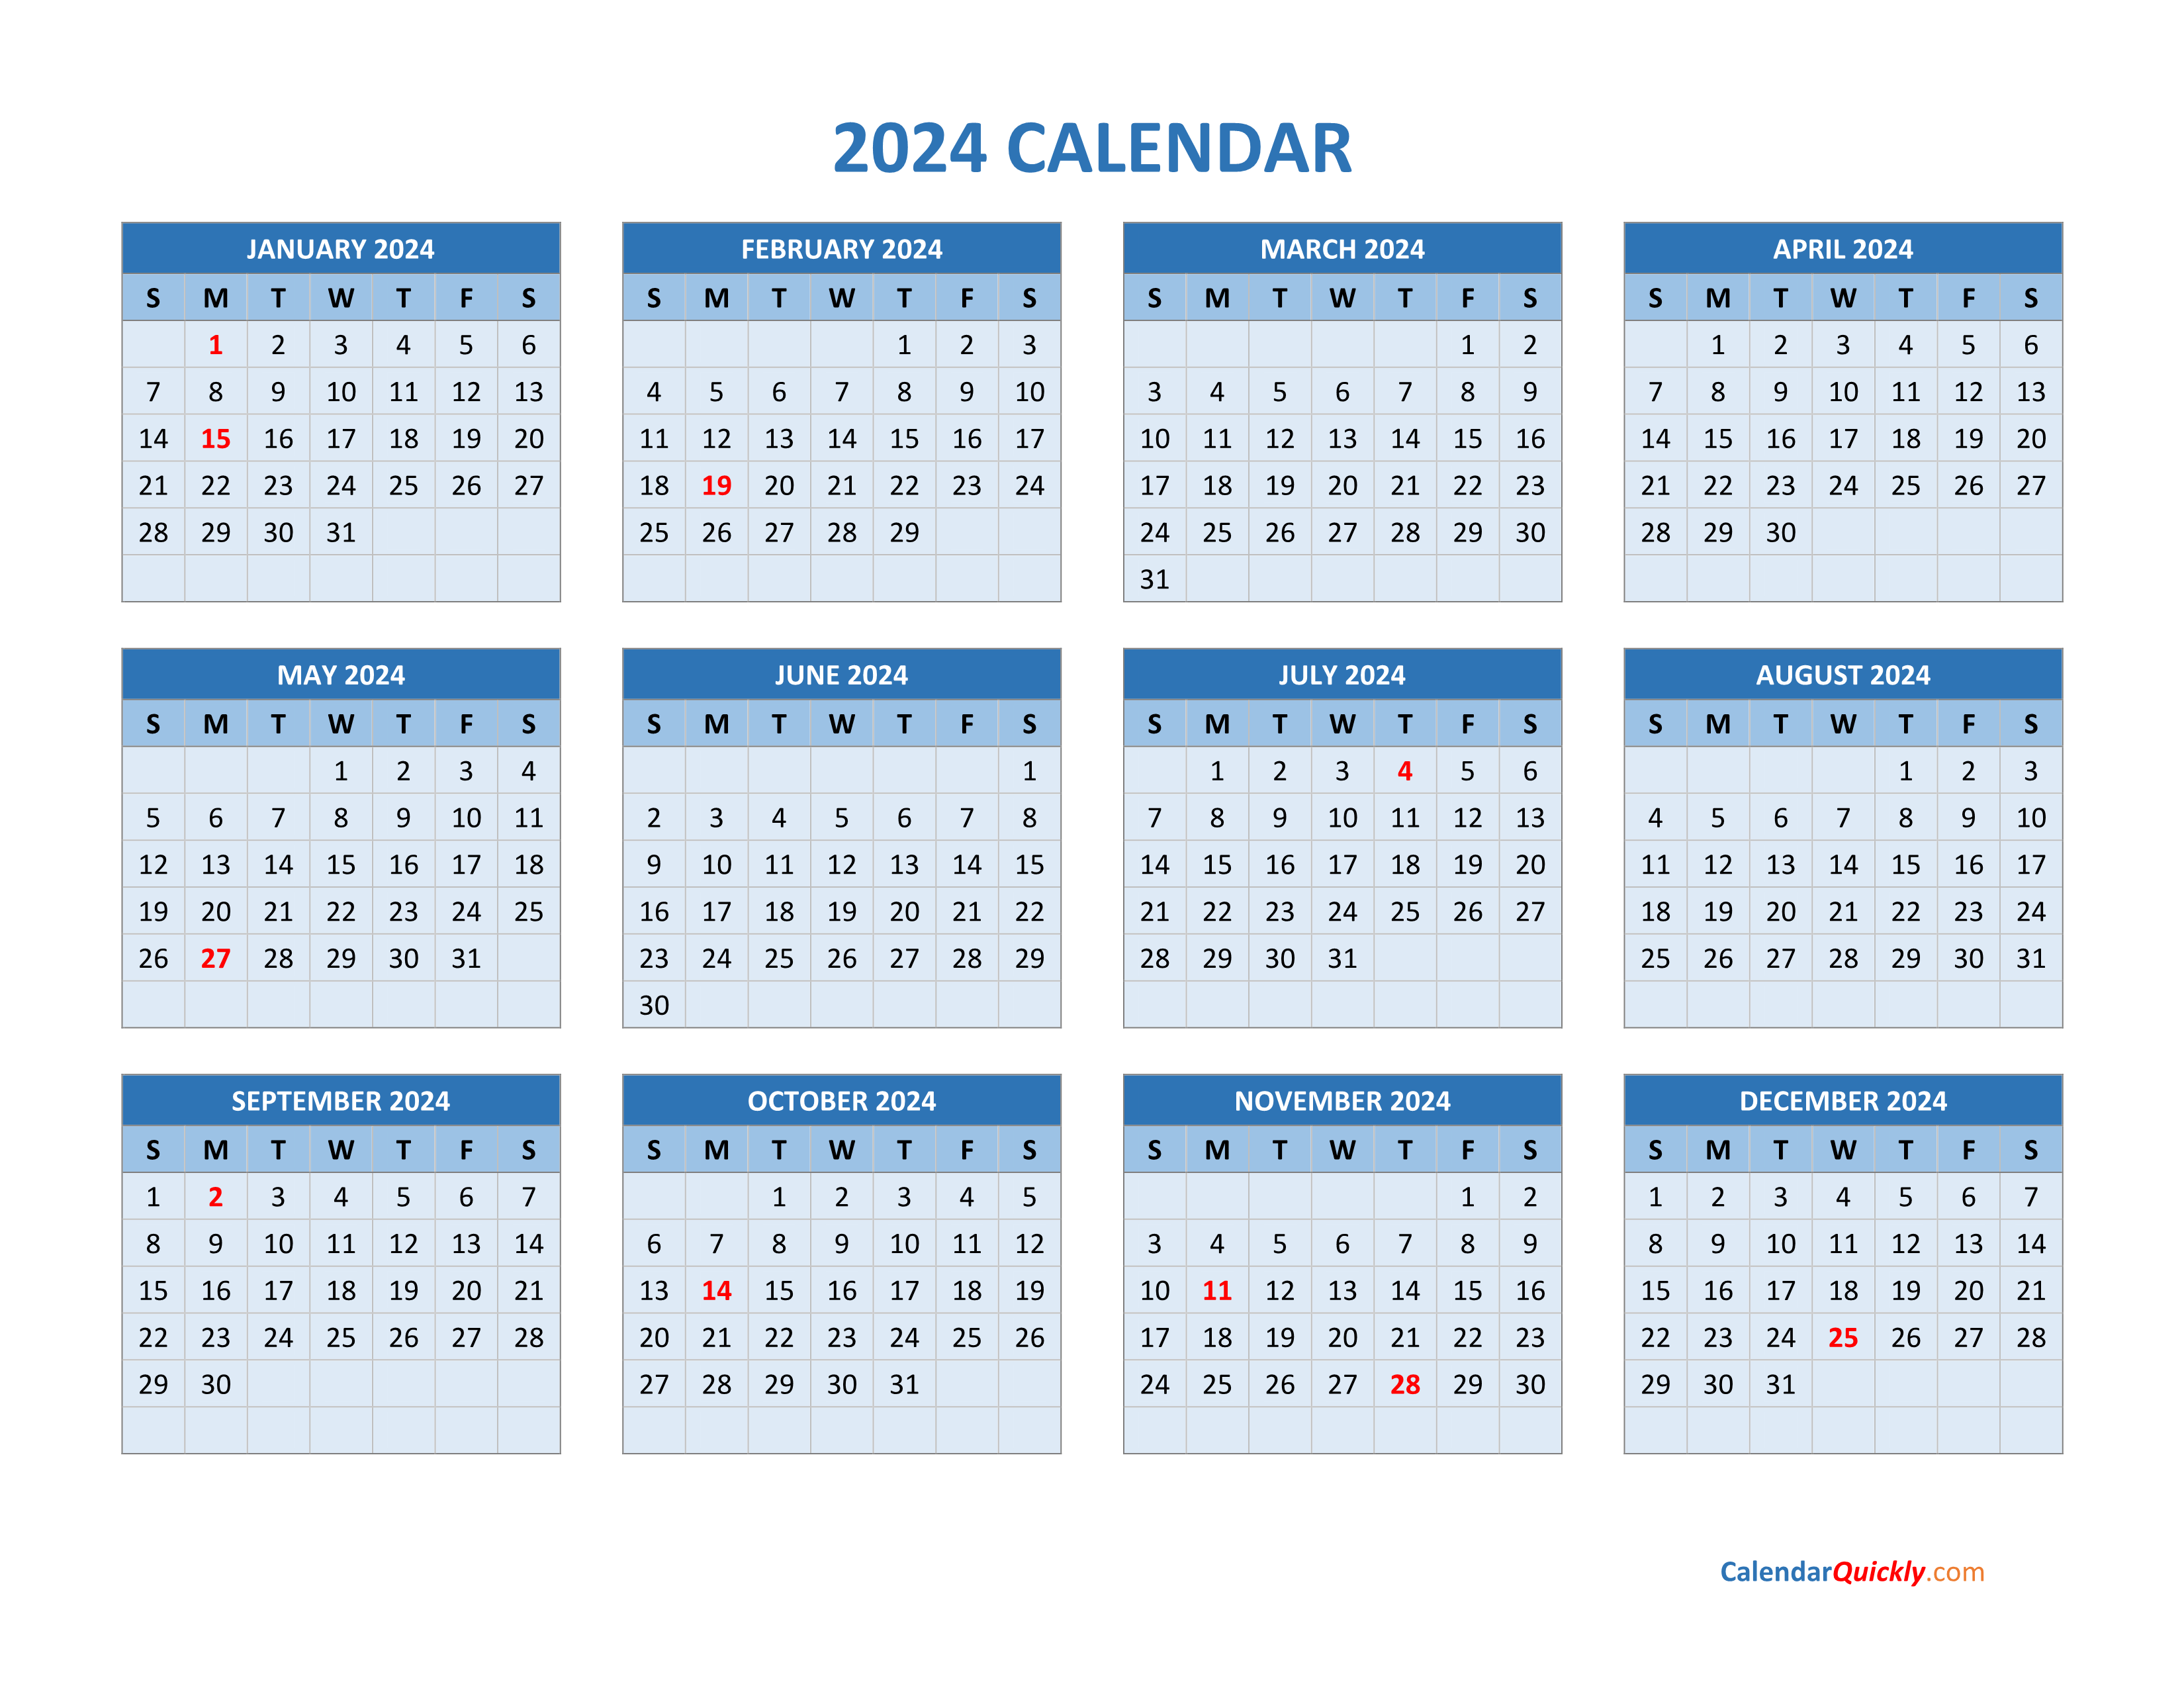 2024 Calendar Calendar Quickly